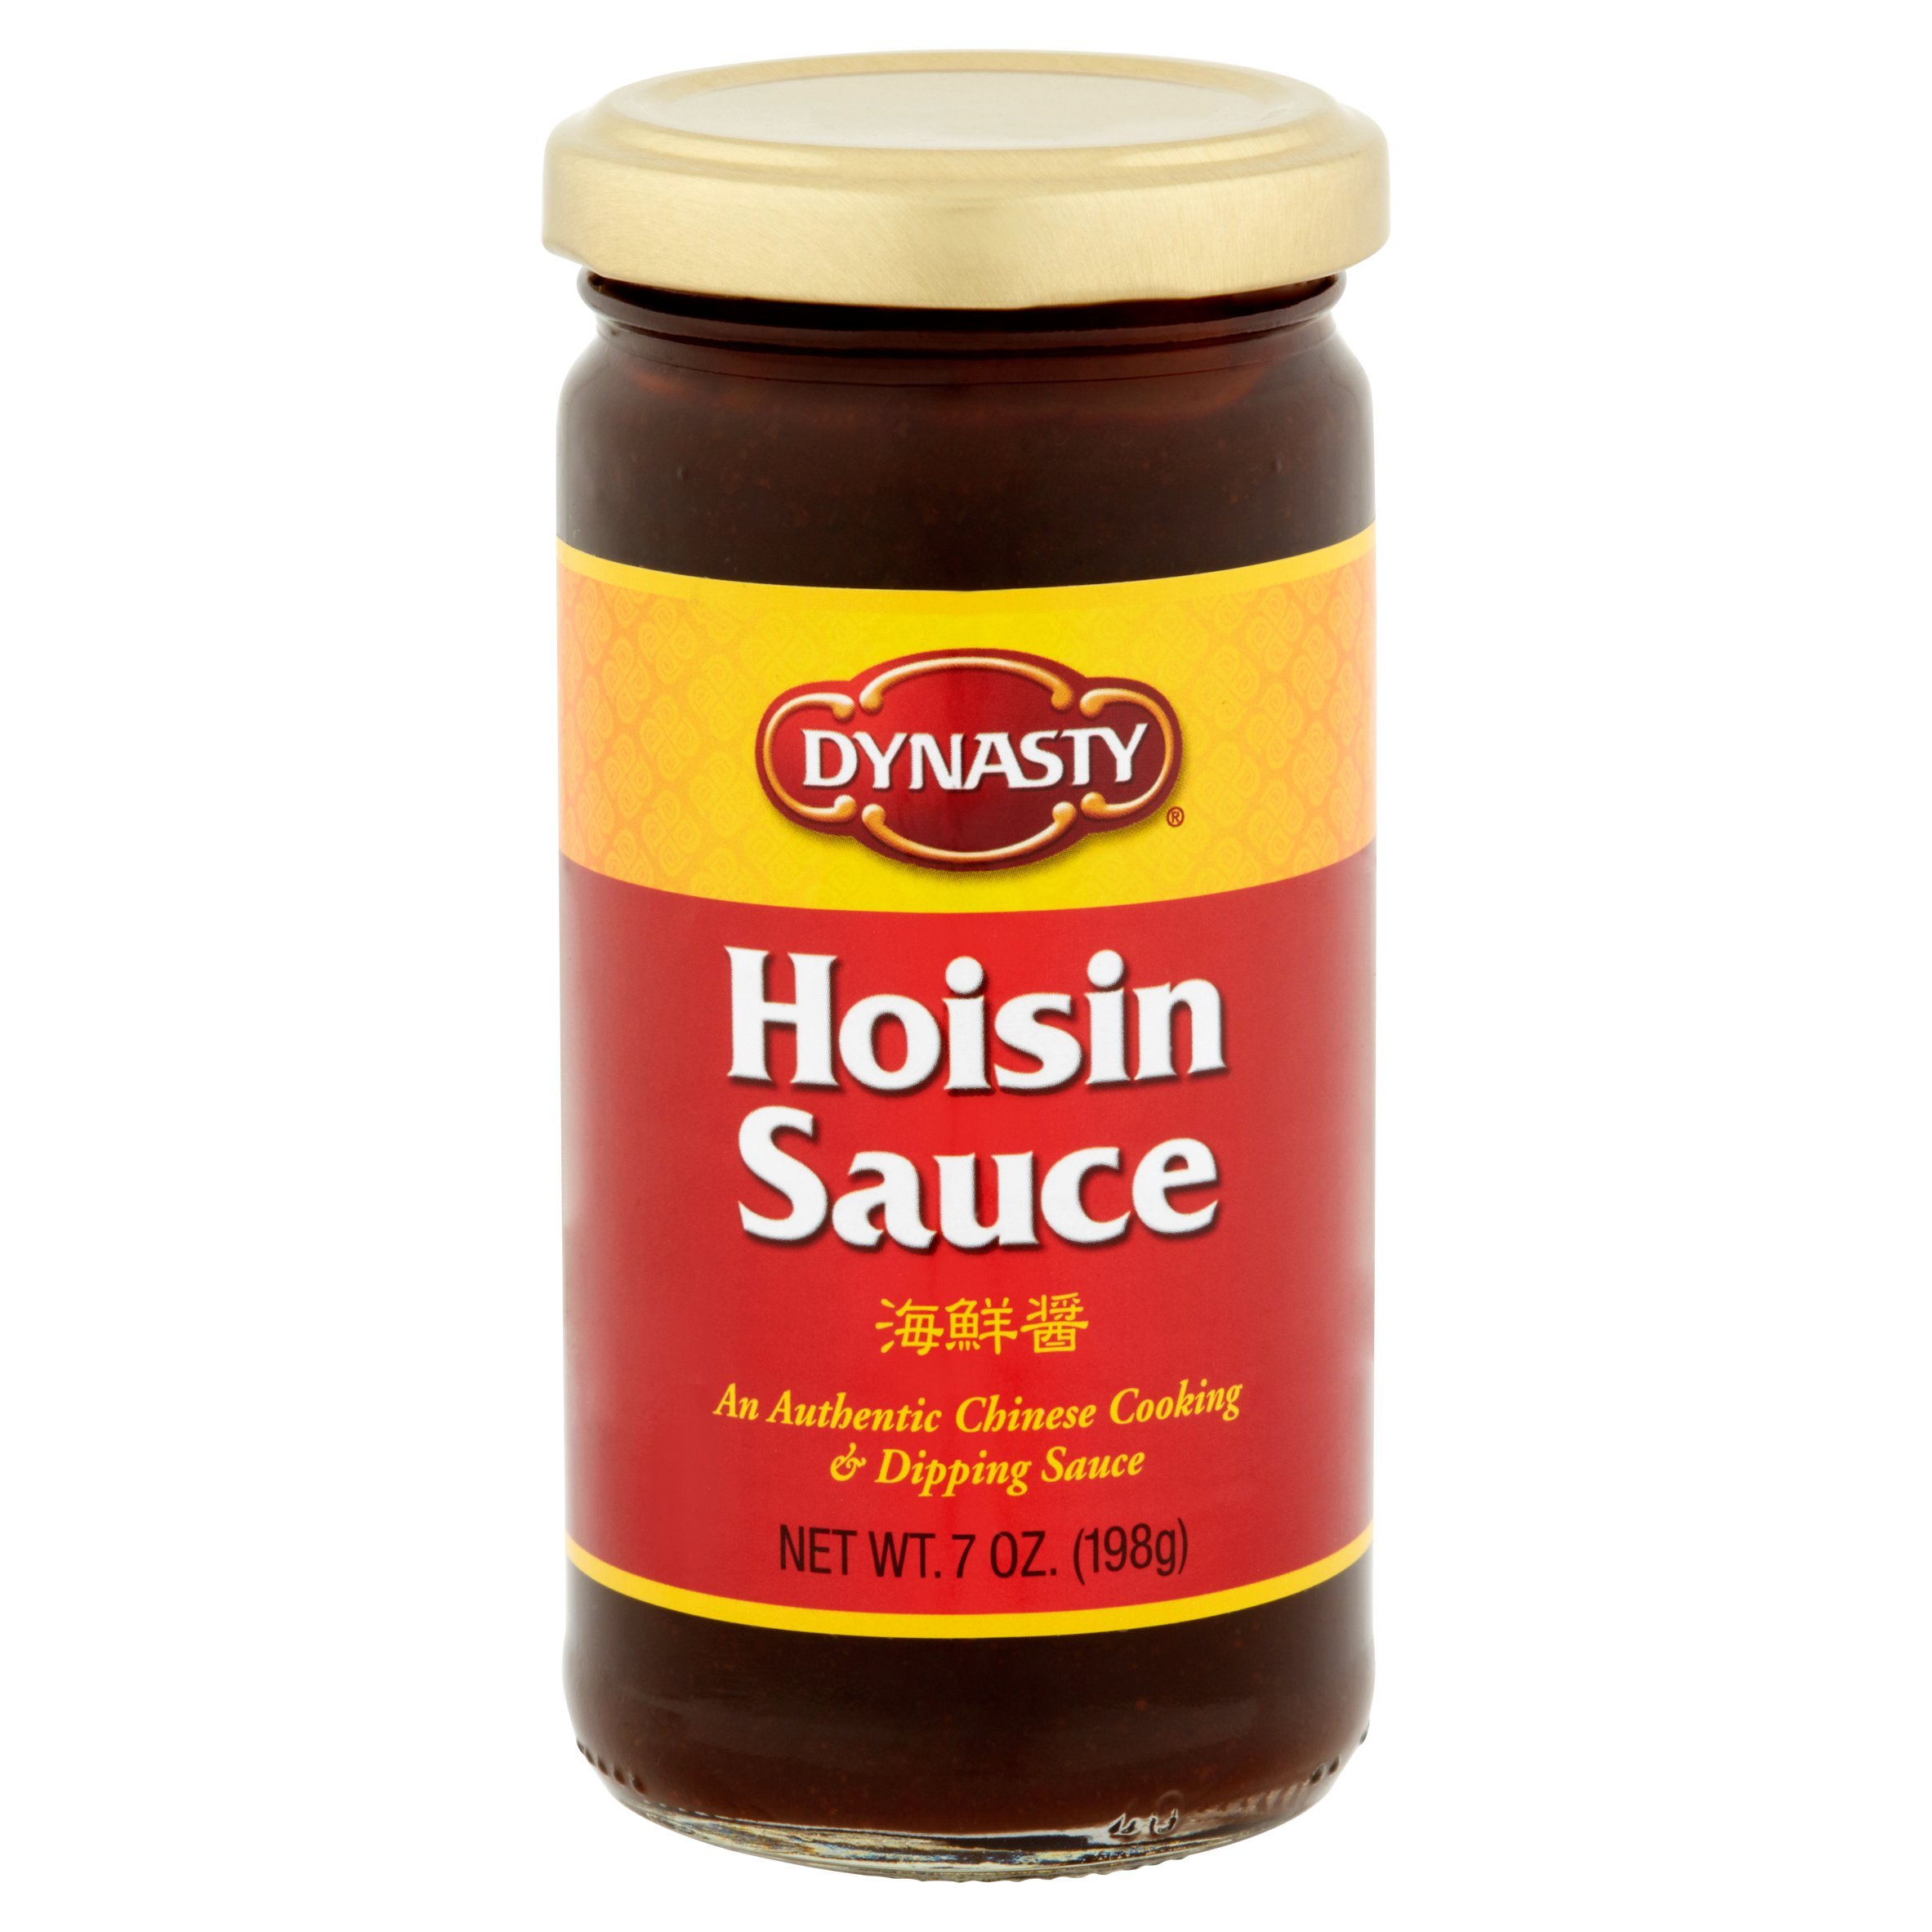 35 Hoisin Sauce Nutrition Label